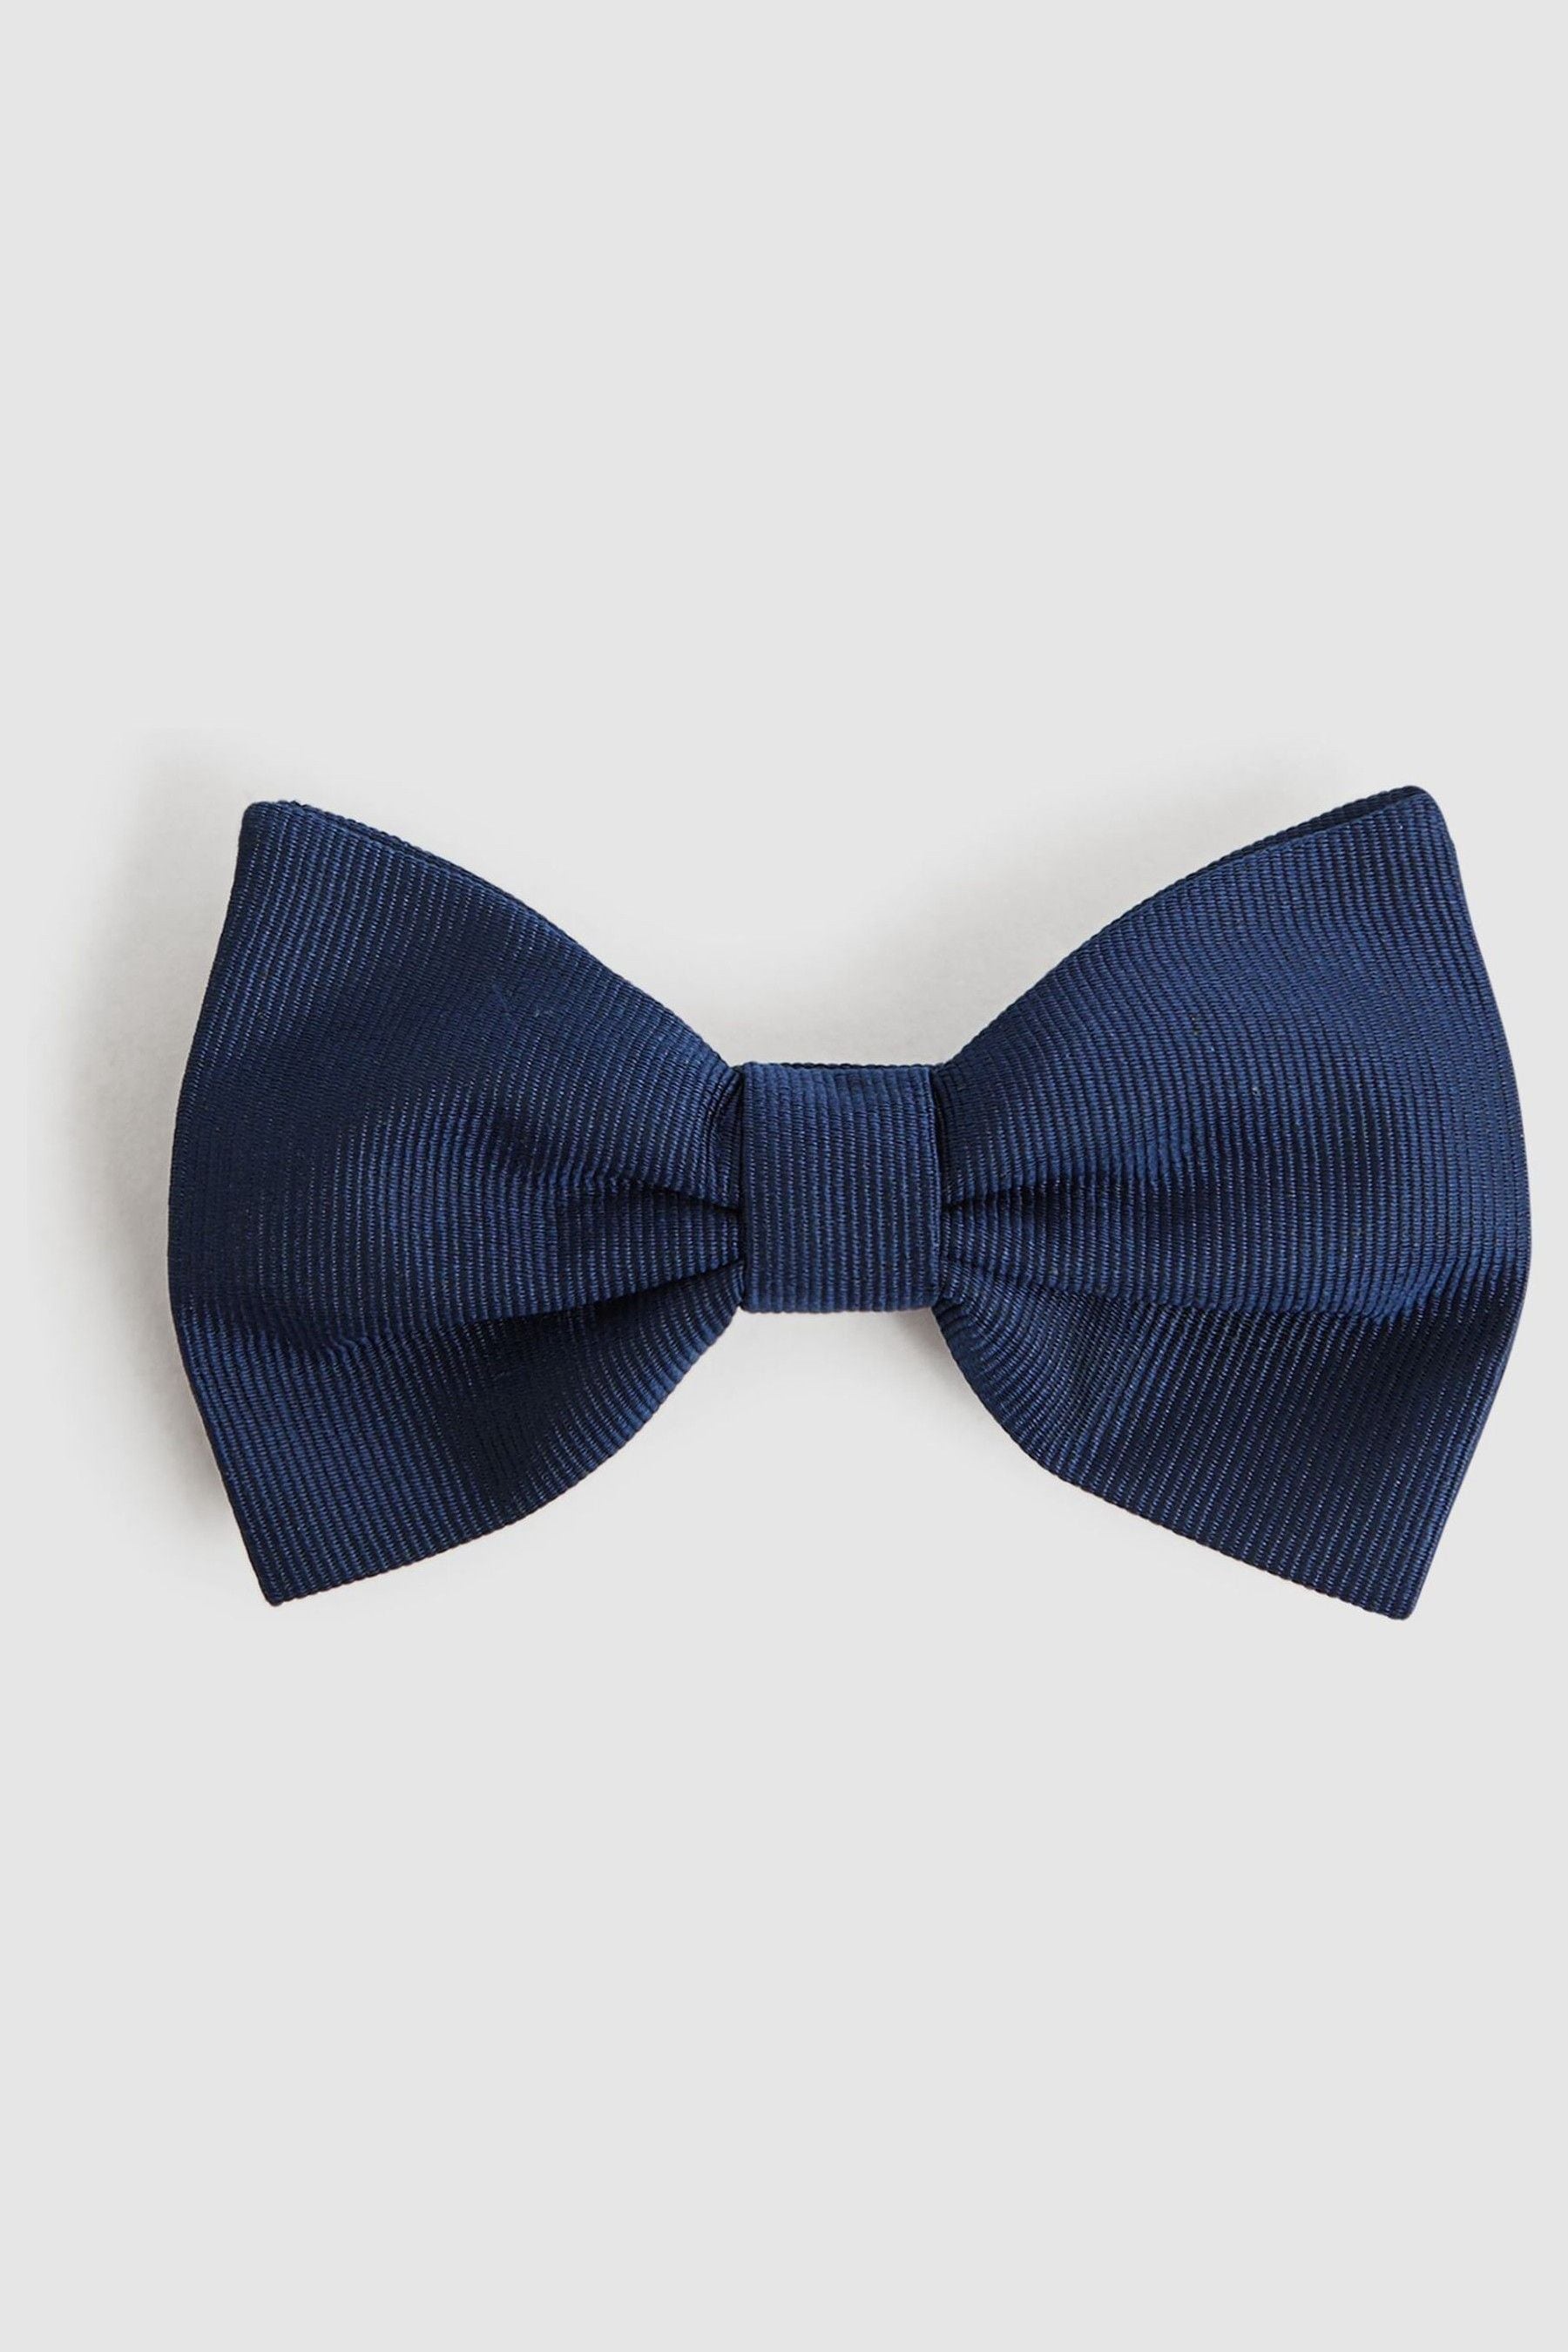 Reiss Boyle - Navy Grosgrain Silk Bow Tie, One